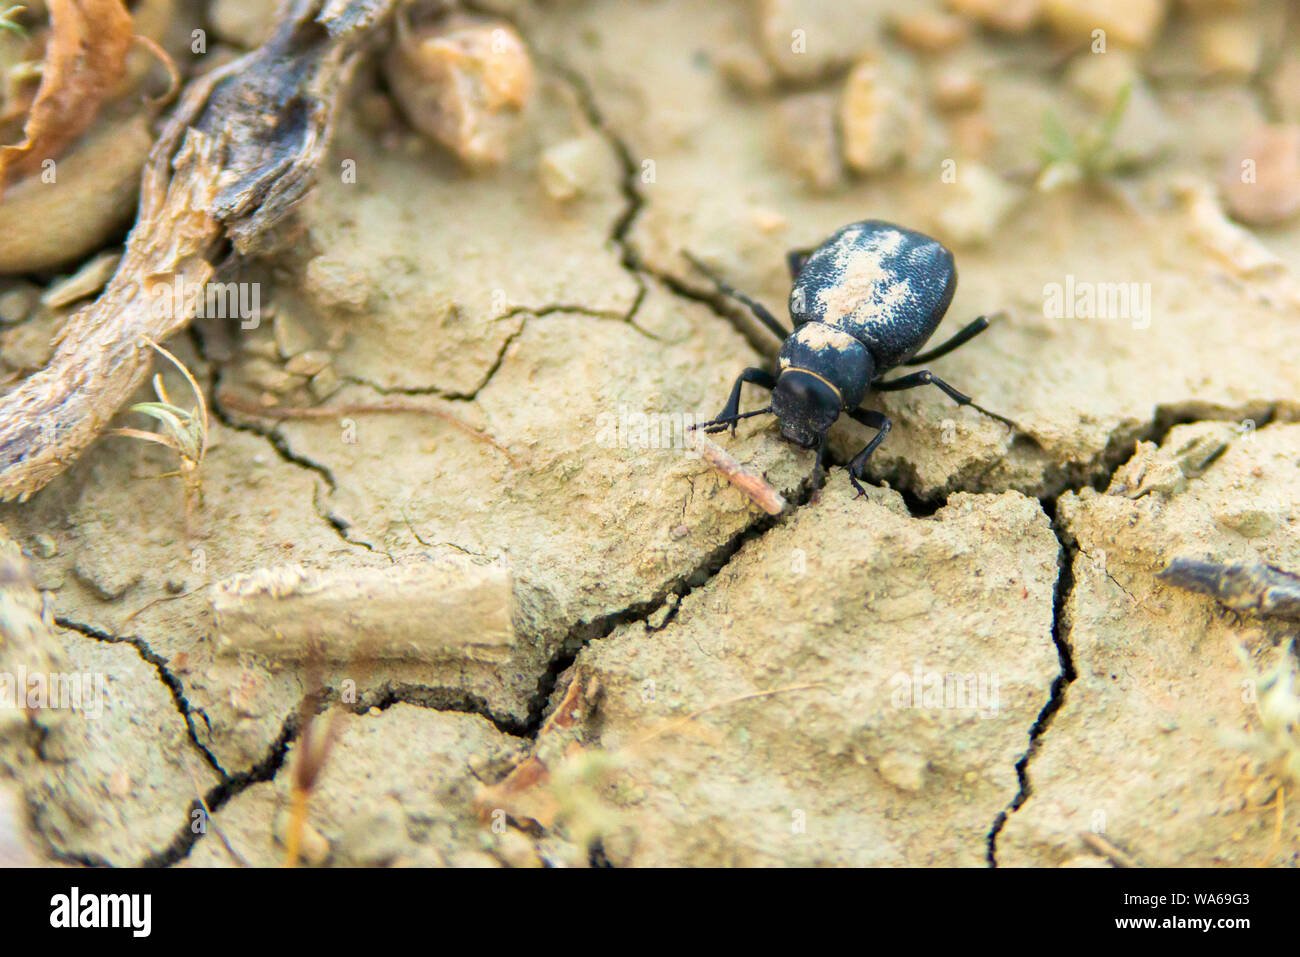 Black beetle or Blaps Mortisaga closeup on natural background. Stock Photo